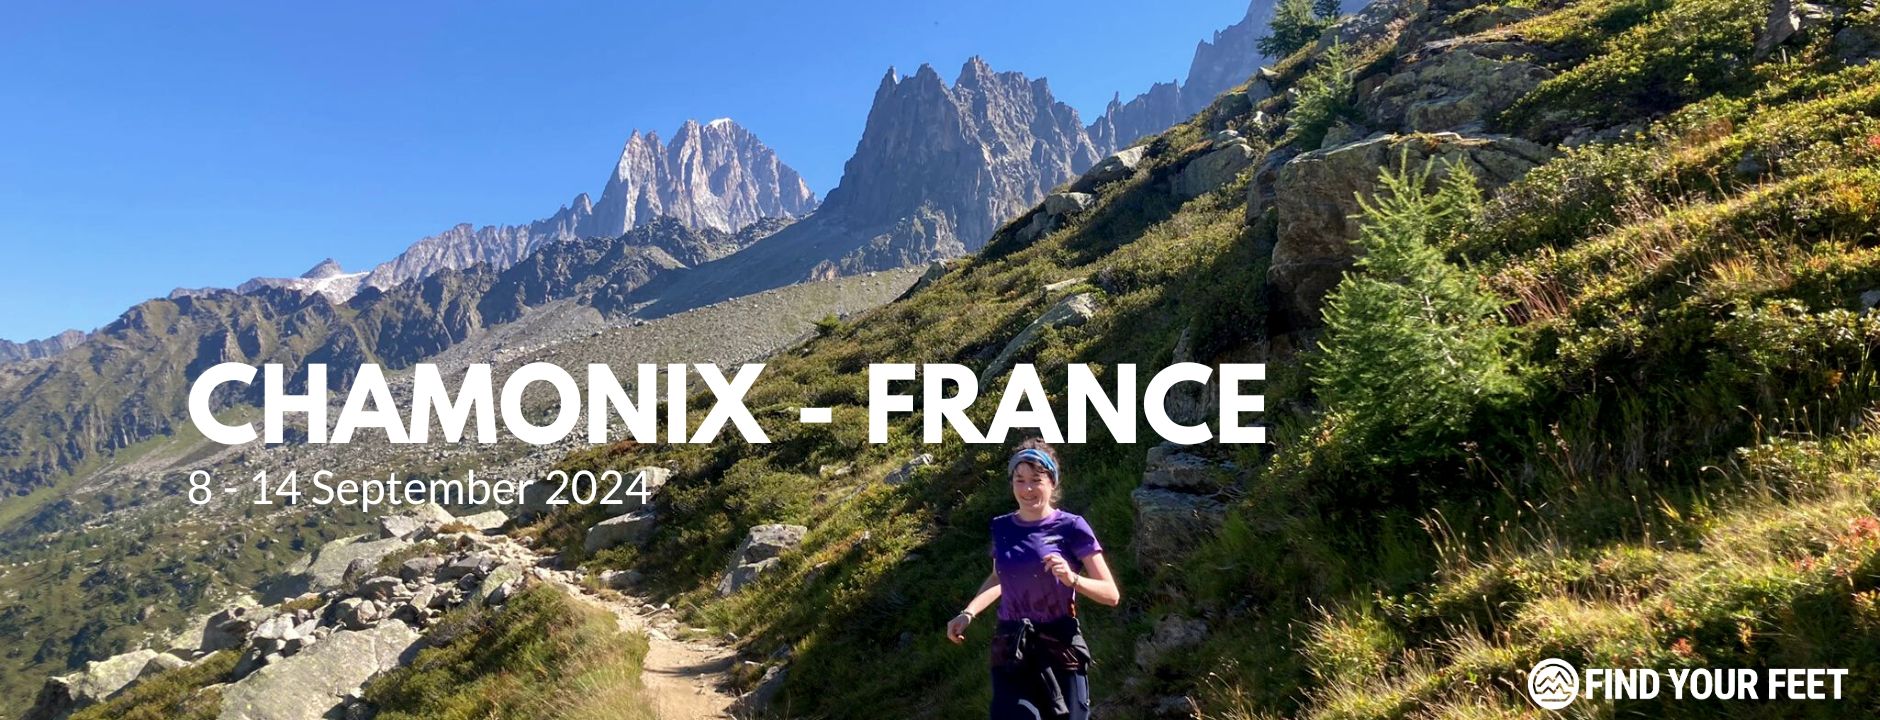 Chamonix Trail Running Find Your Feet